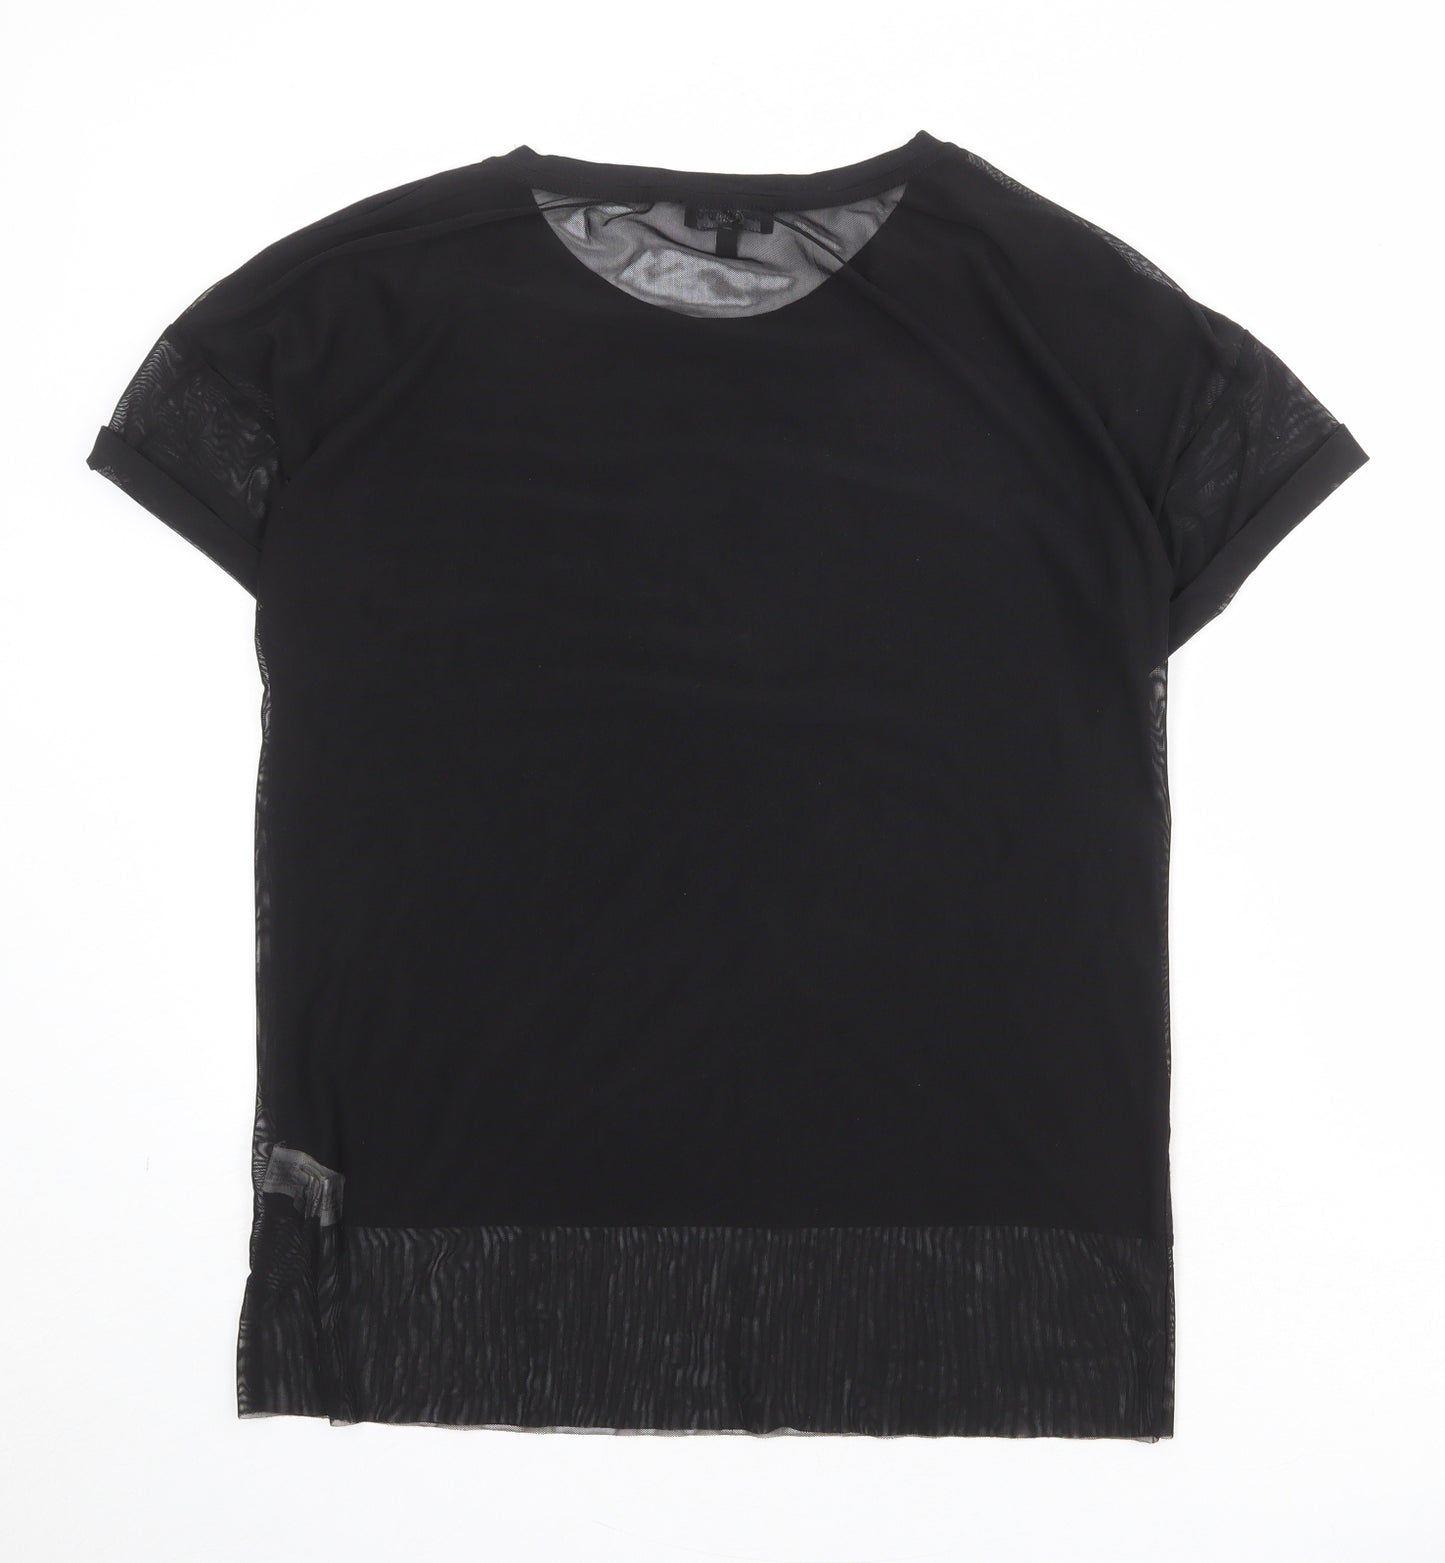 Bershka Womens Black Polyester Basic T-Shirt Size M Round Neck - Bring The Night On